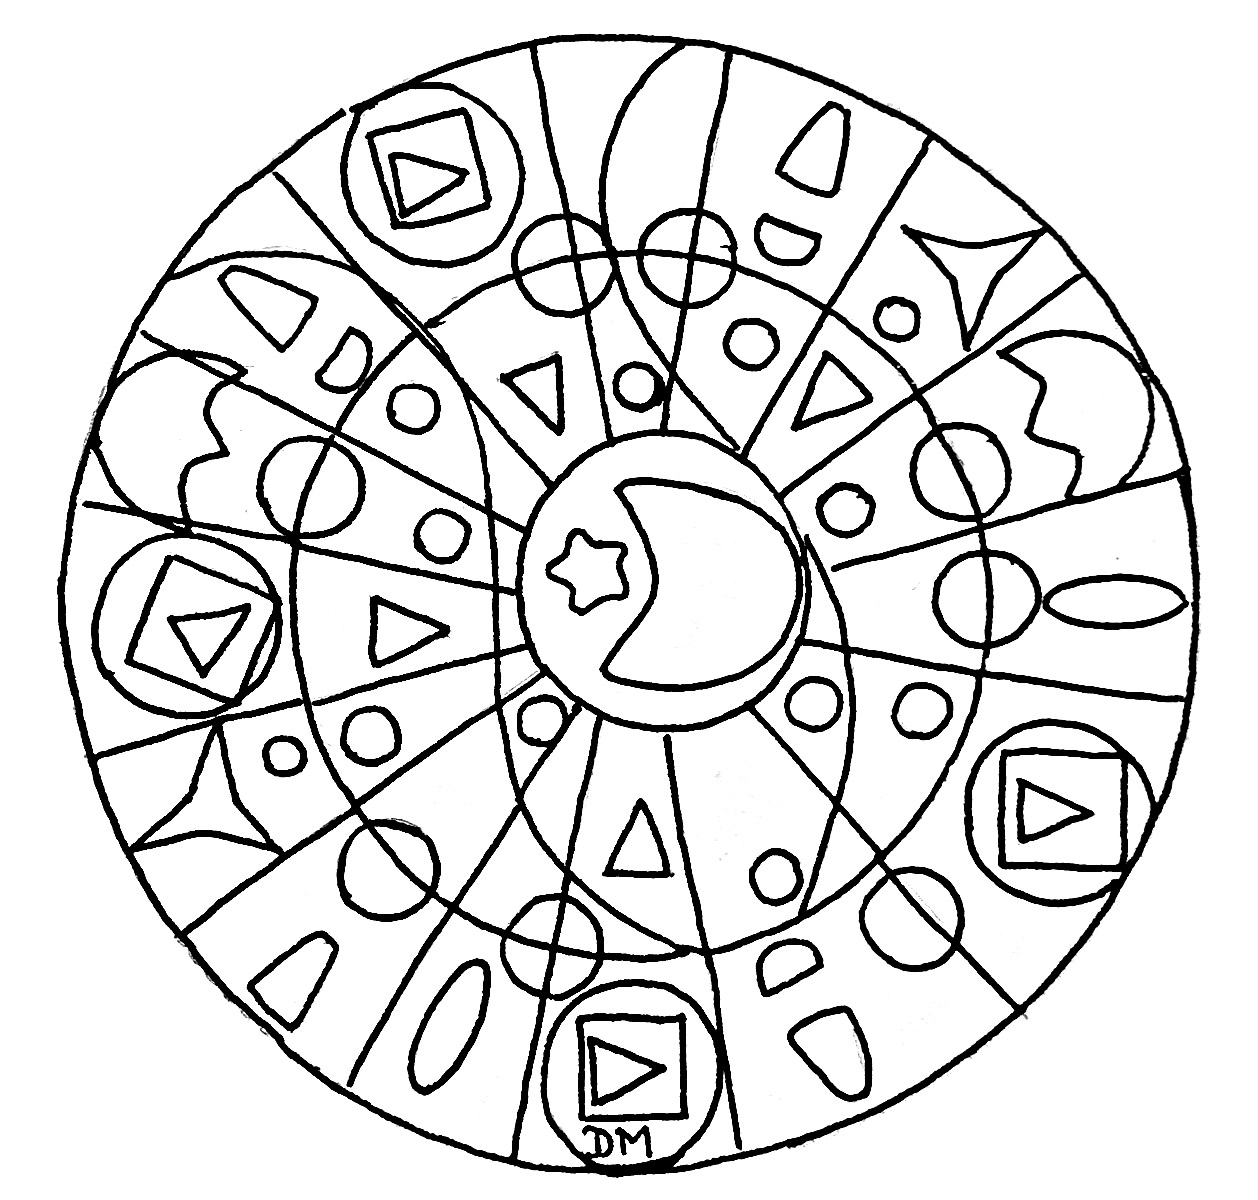 Mandala domandalas simplicite geometrique, Artist : Domandalas